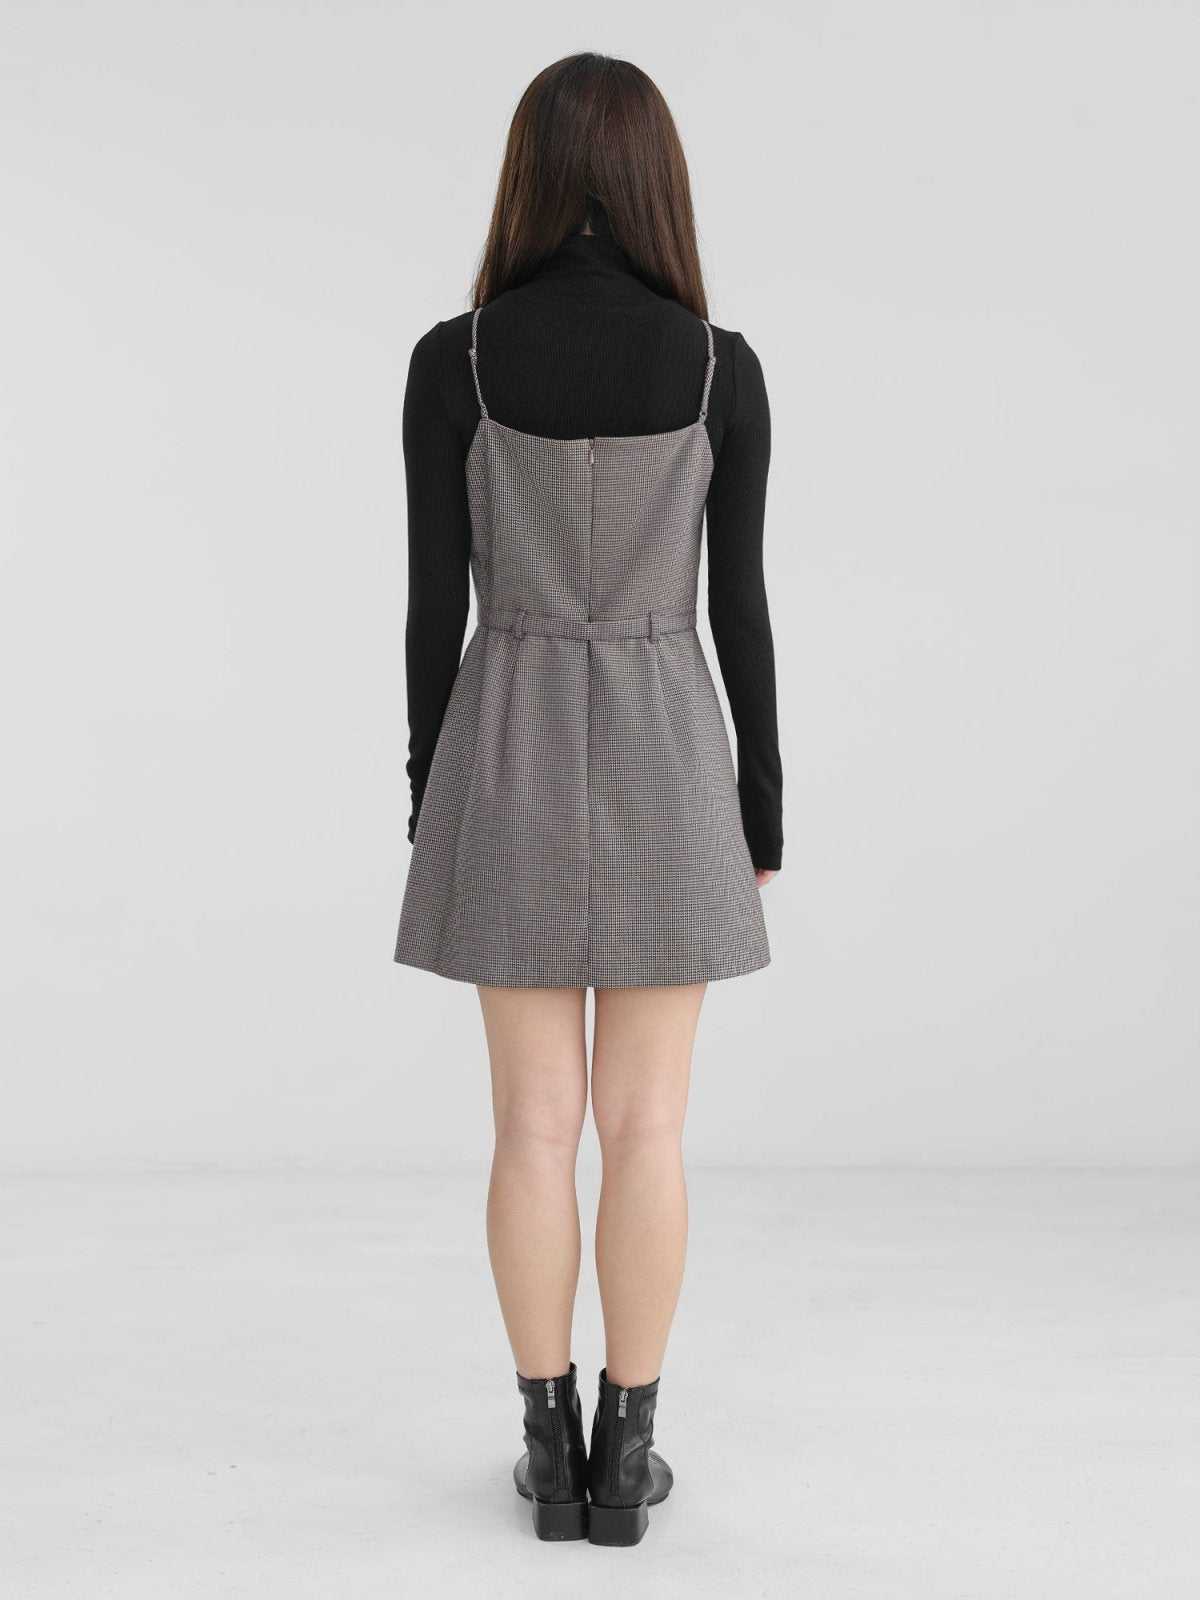 Henna Buckle Mini Dress - DAG-DD1301-23DarkHoundtoothS - Dark Houndtooth - S - D'zage Designs